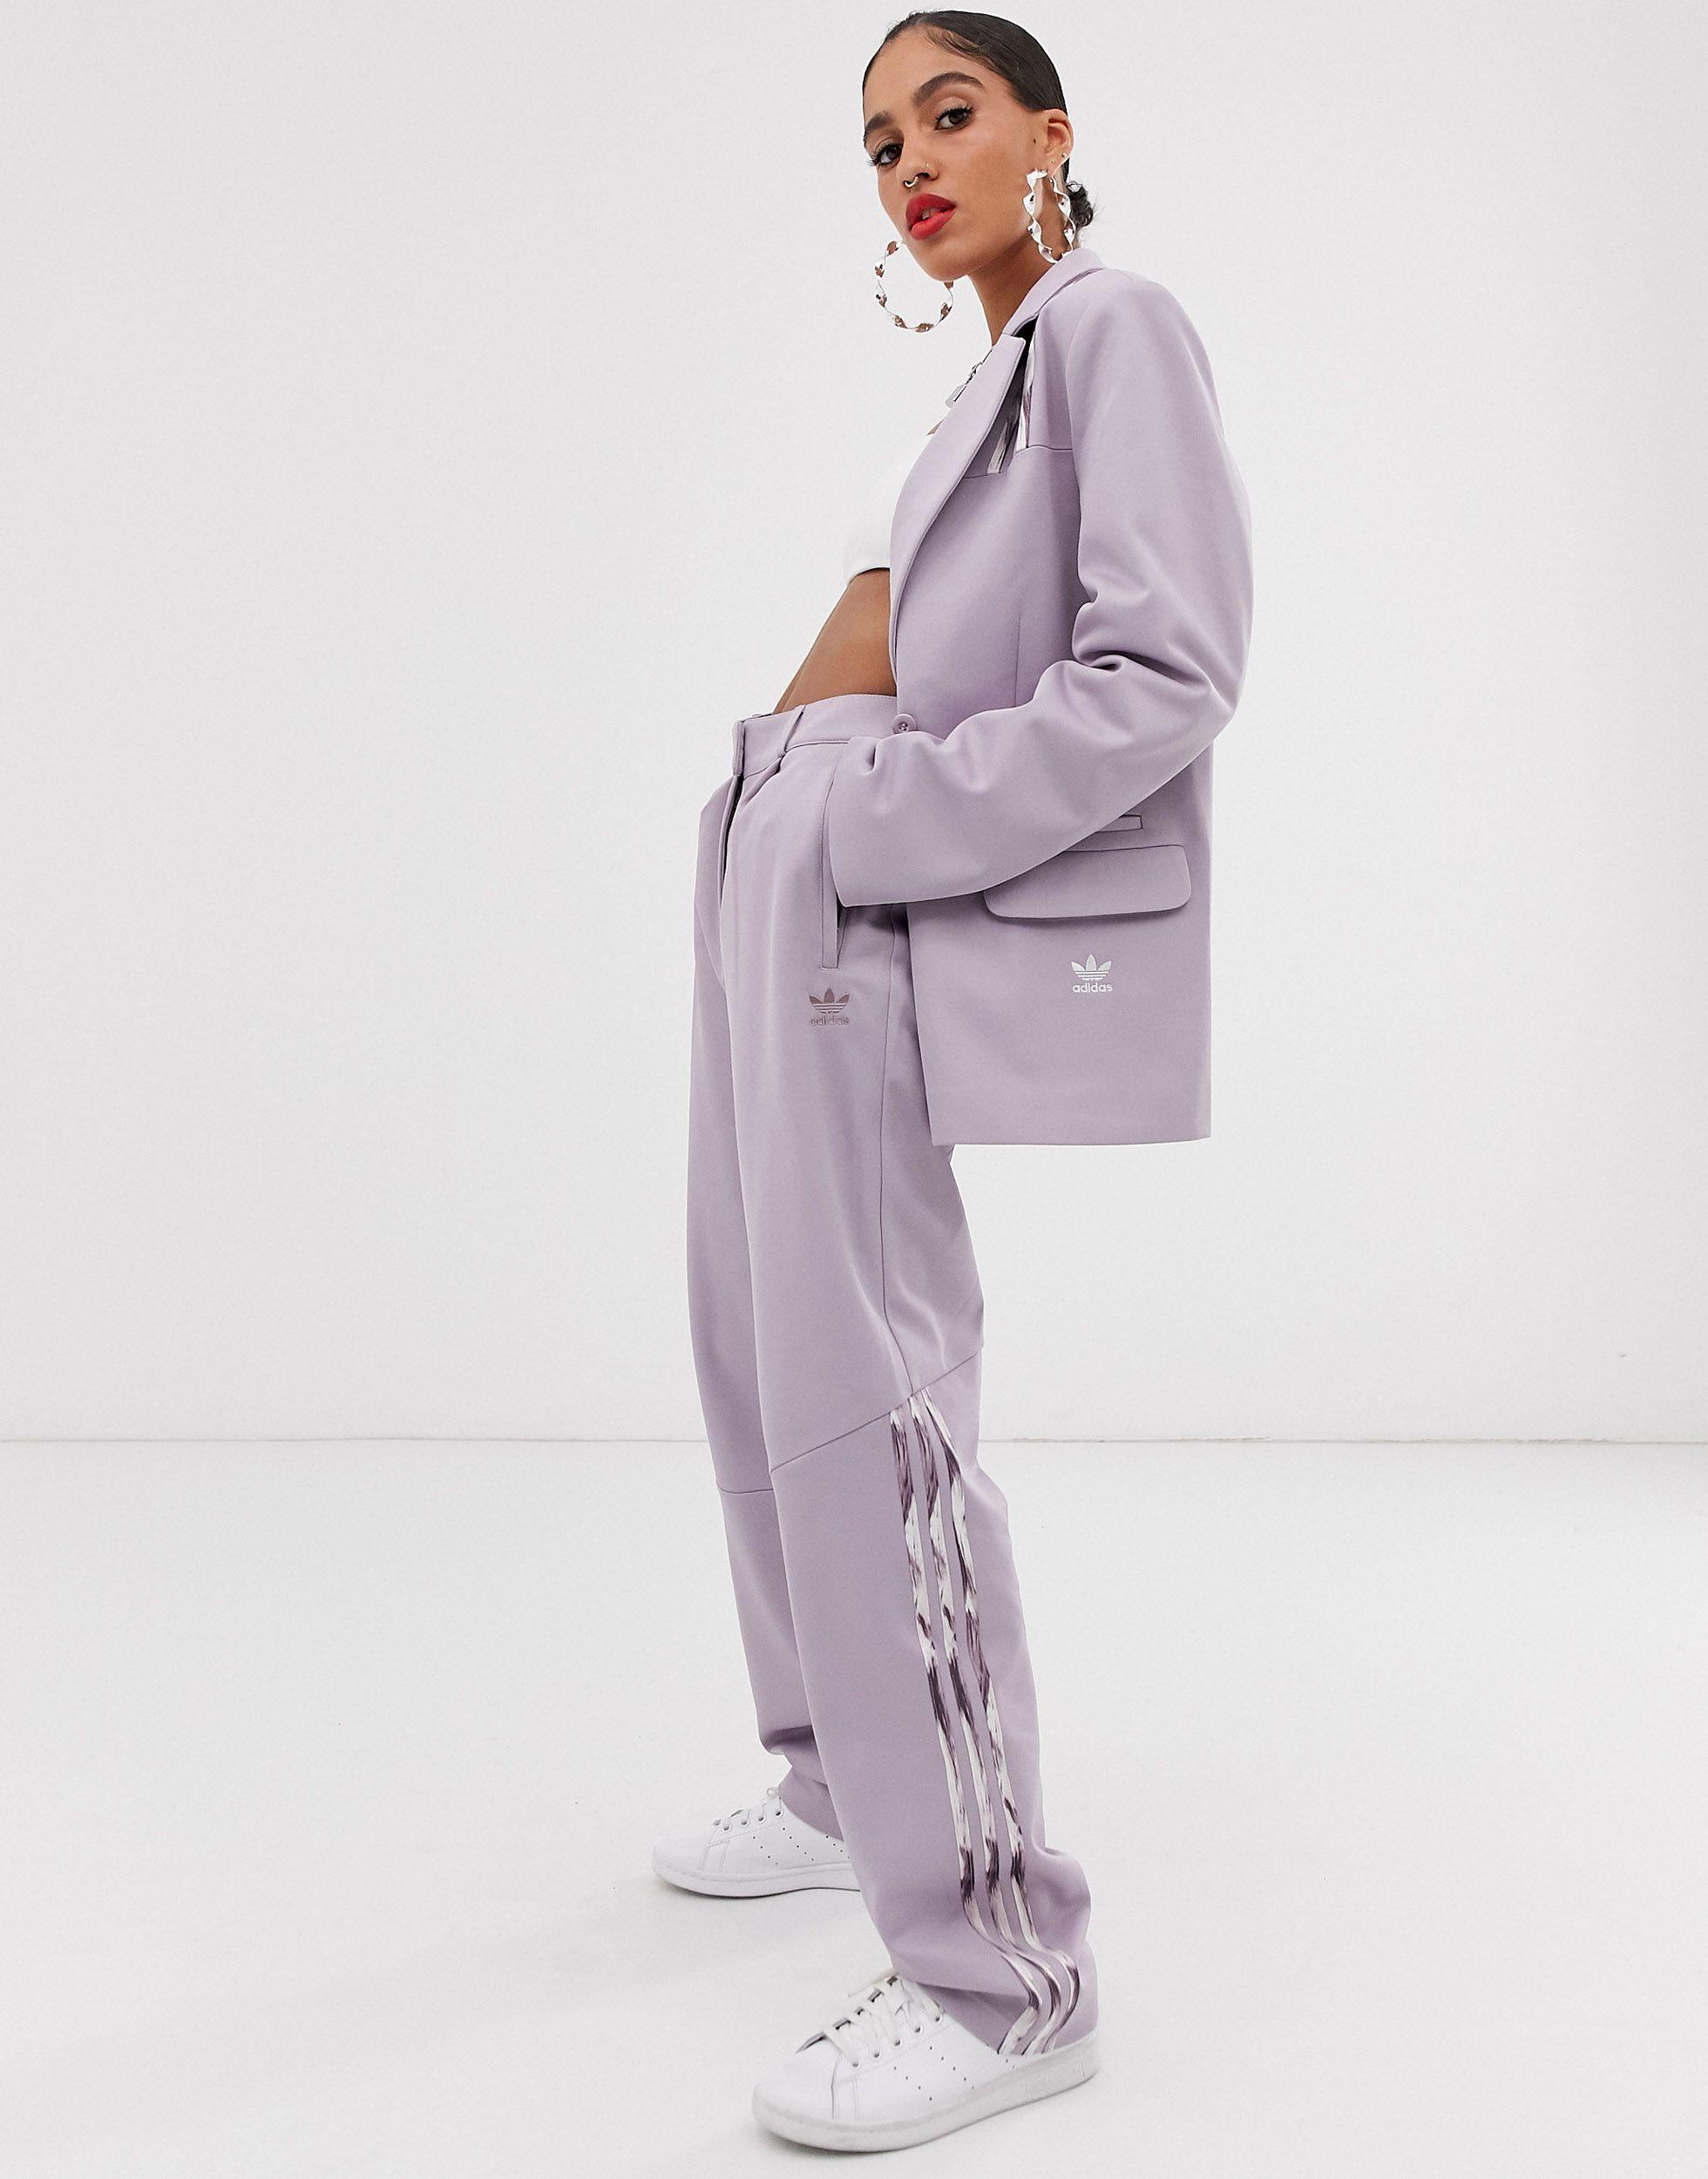 adidas Originals X Danielle Cathari Deconstructed Pants in Purple - Lyst